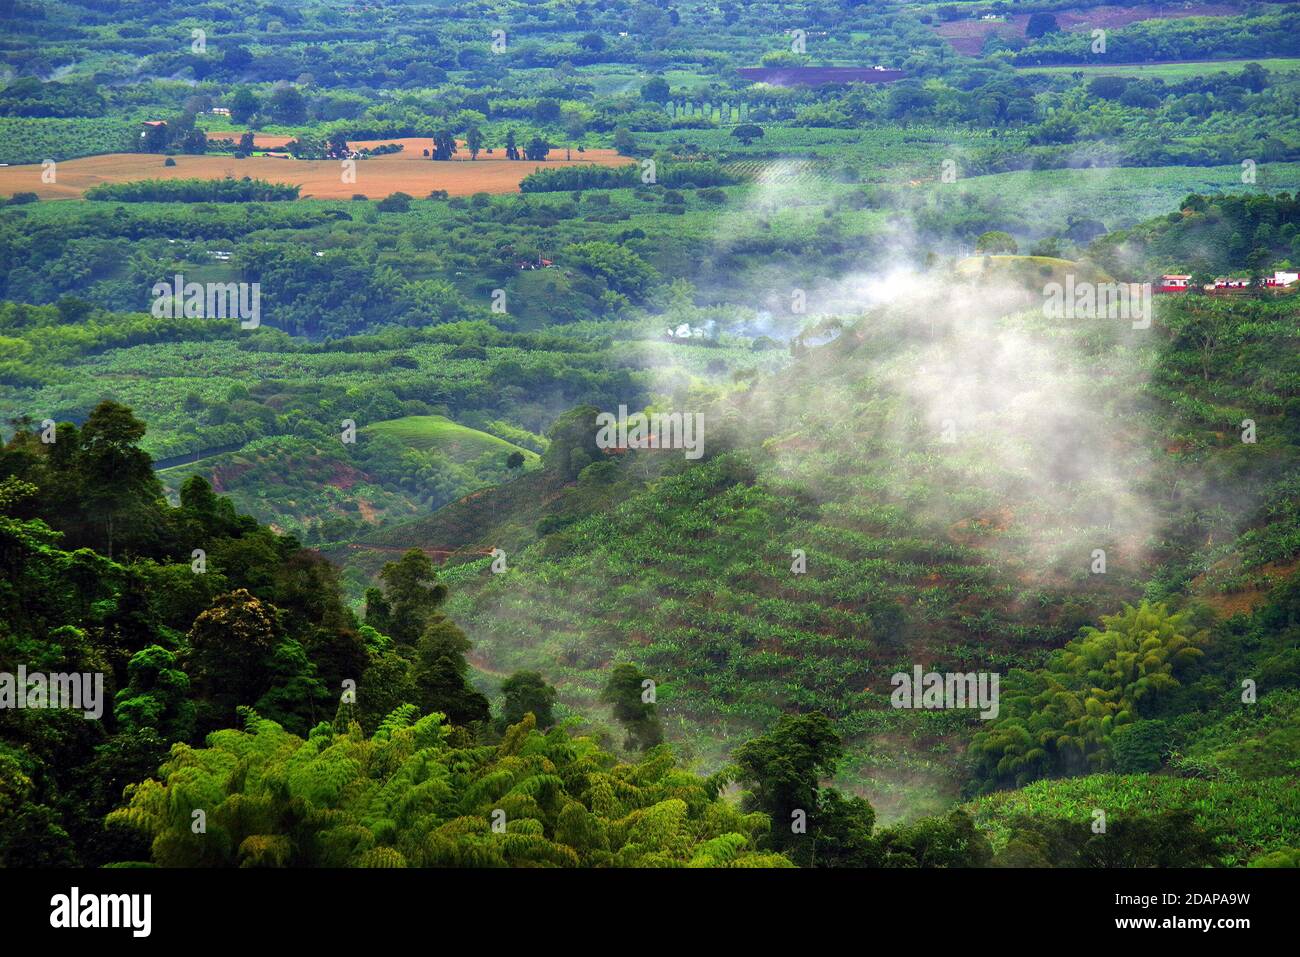 Hills covered in coffee and banana plantations near Buenavista, Antioquia, Colombia Stock Photo